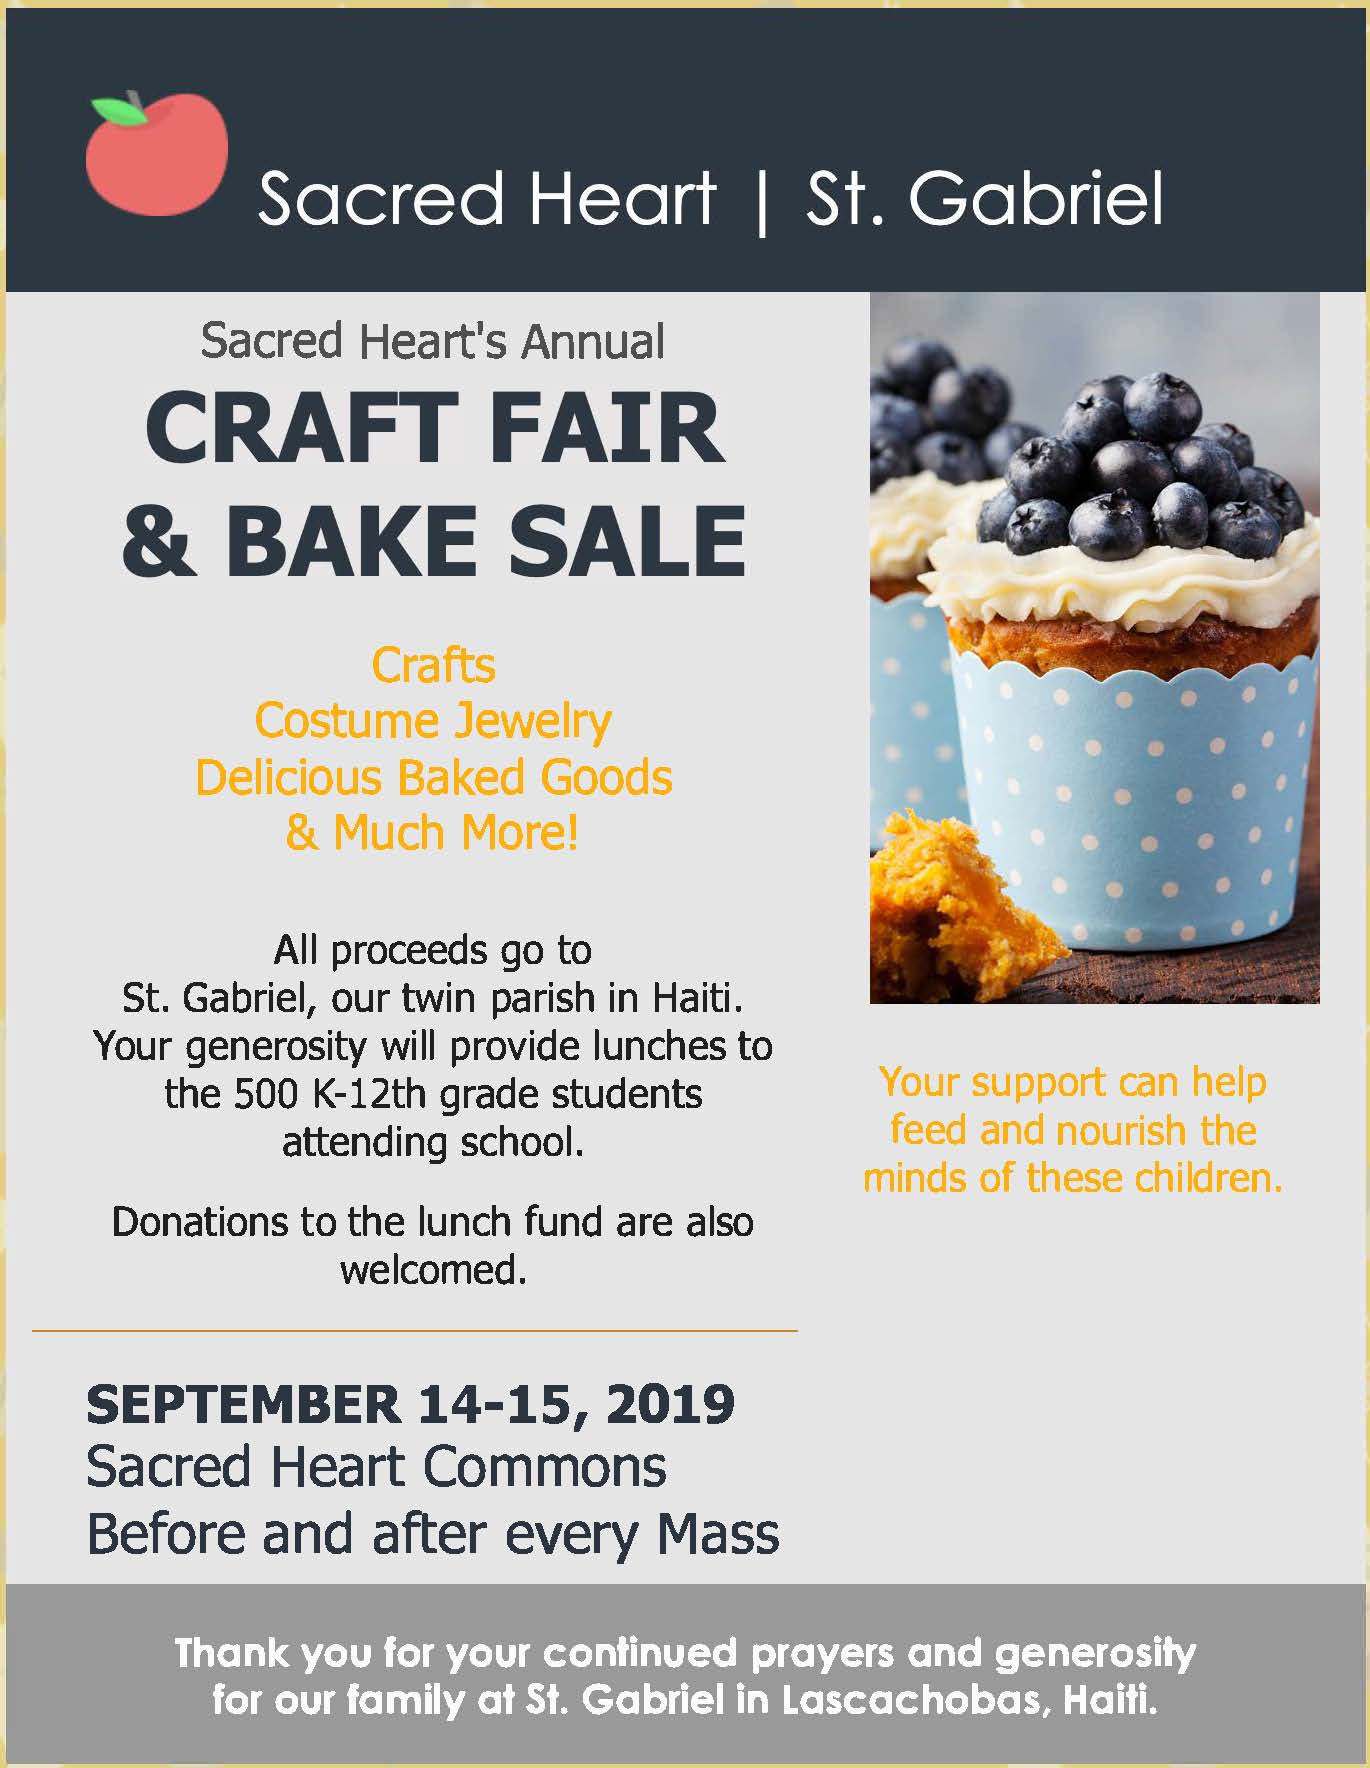 Sacred Heart's Annual Craft Fair and Bake Sale